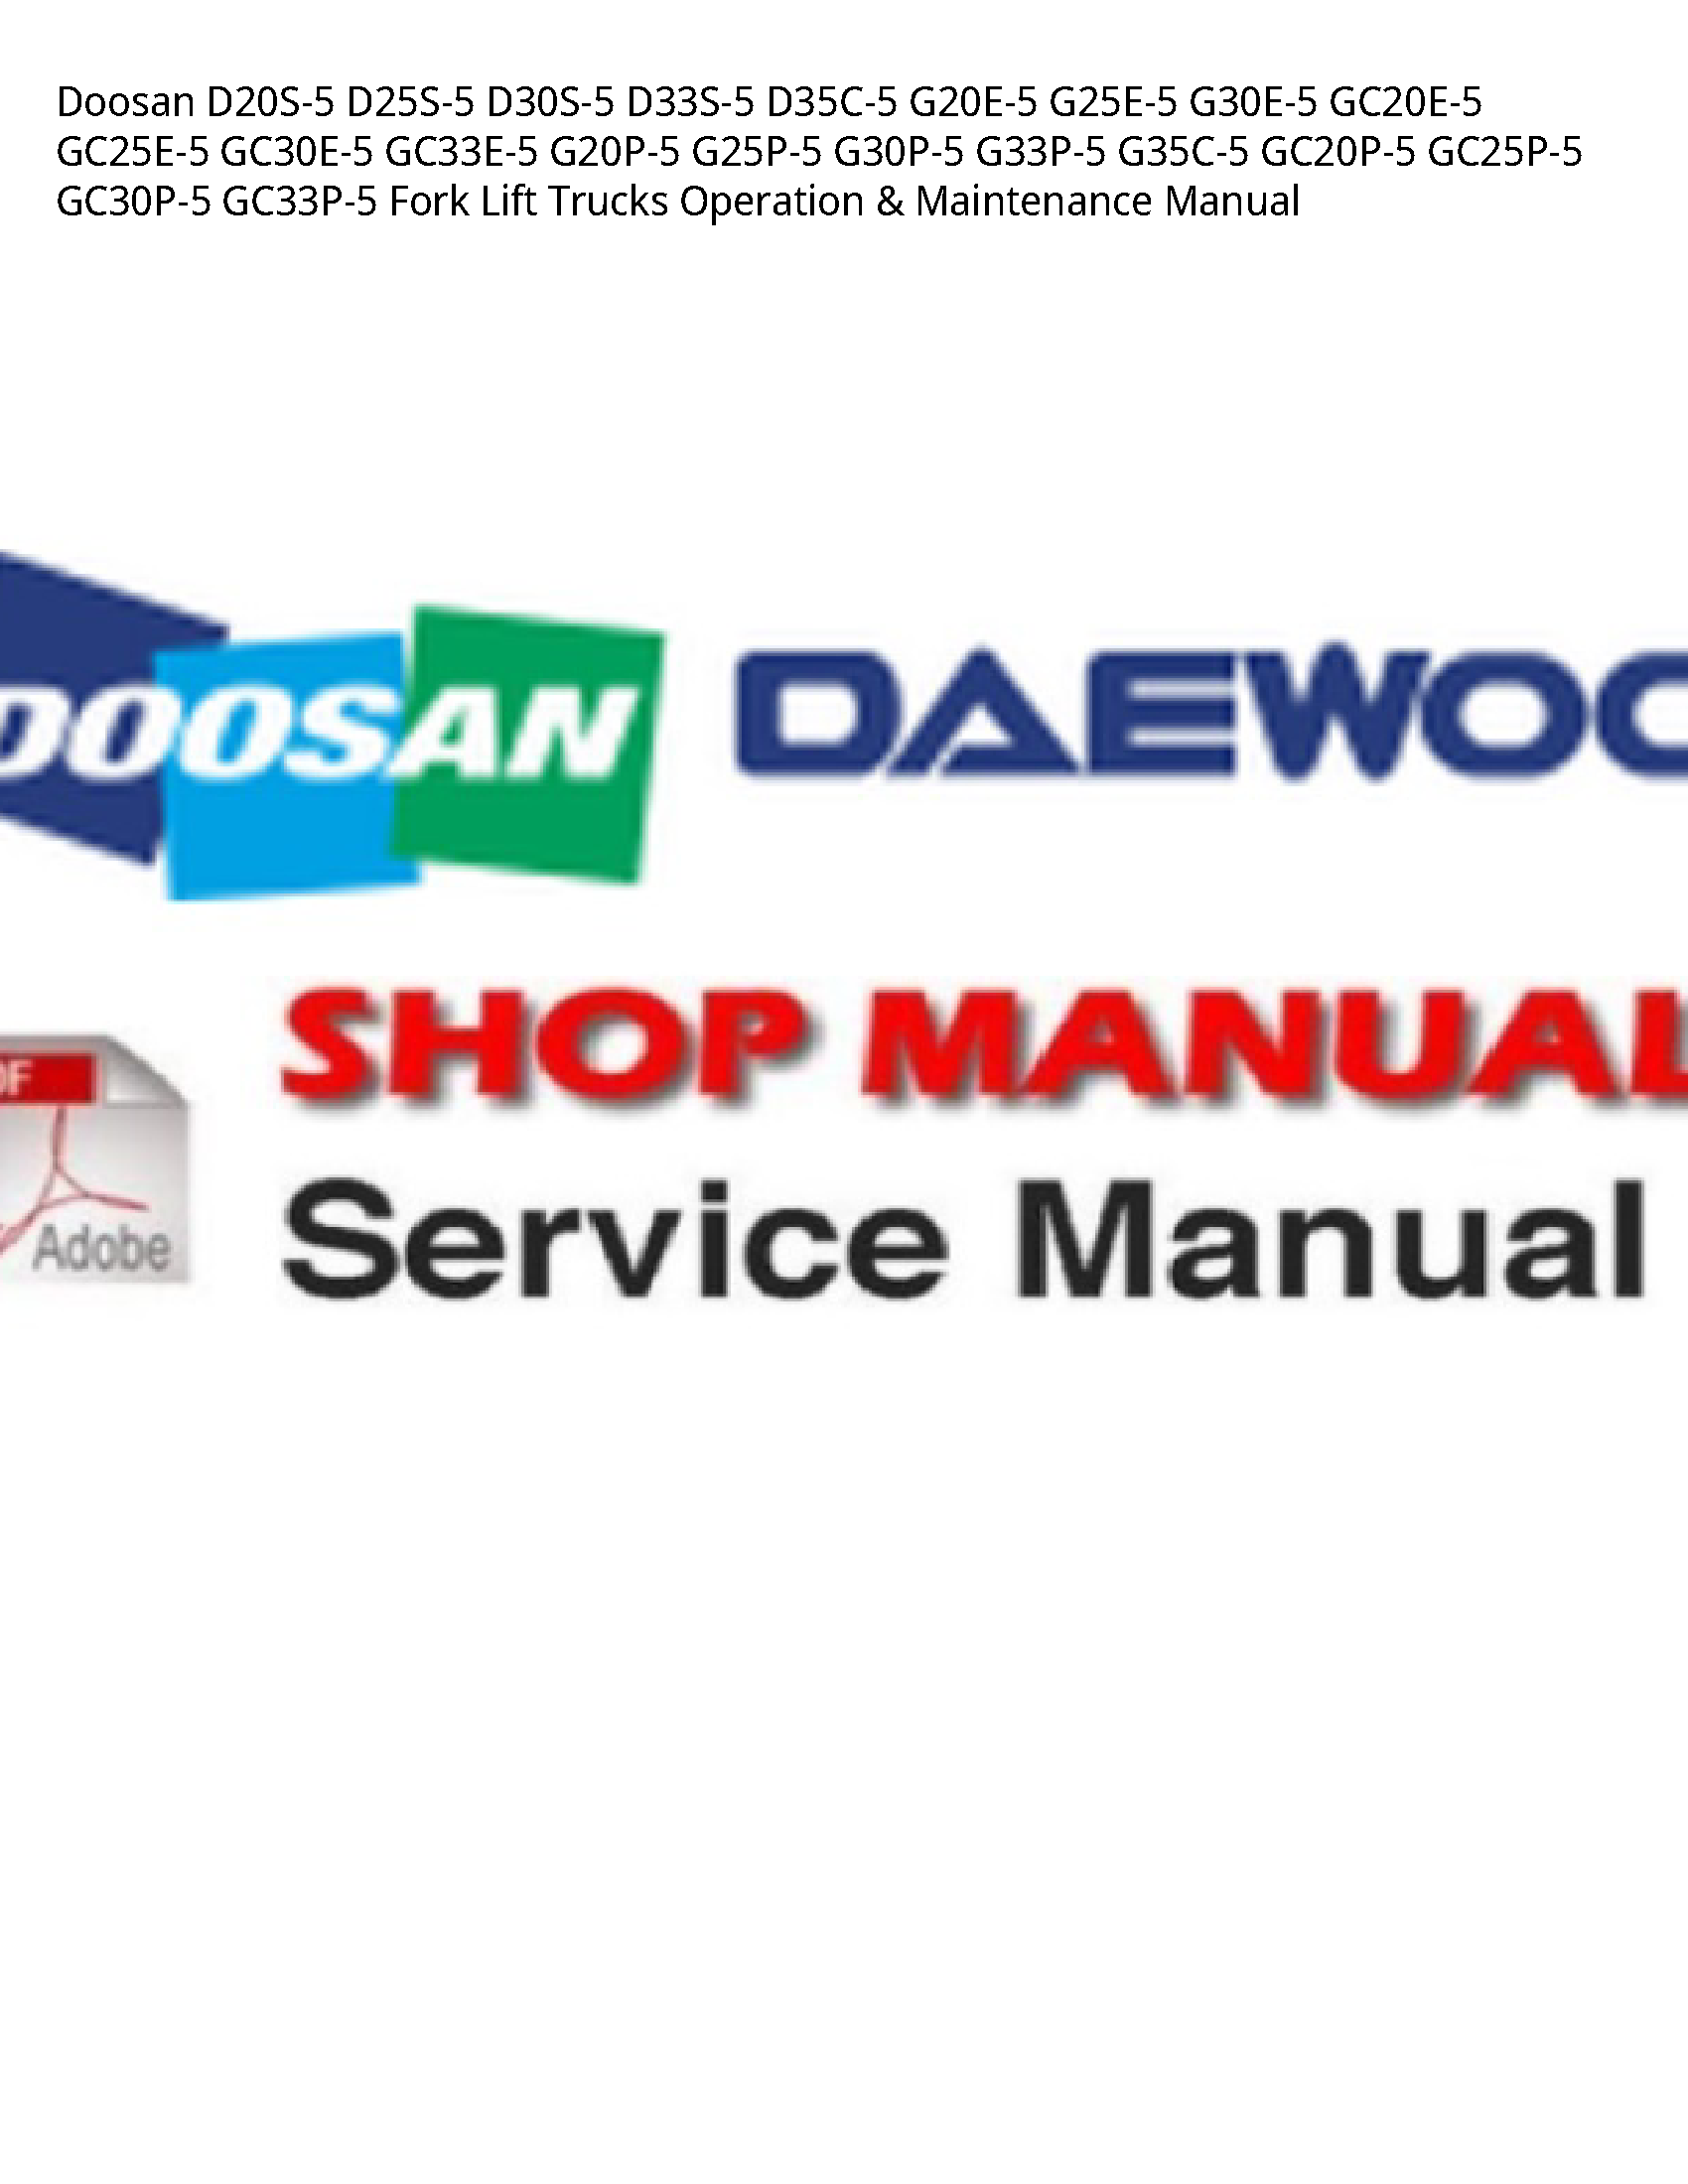 Doosan D20S-5 Fork Lift Trucks Operation Maintenance manual